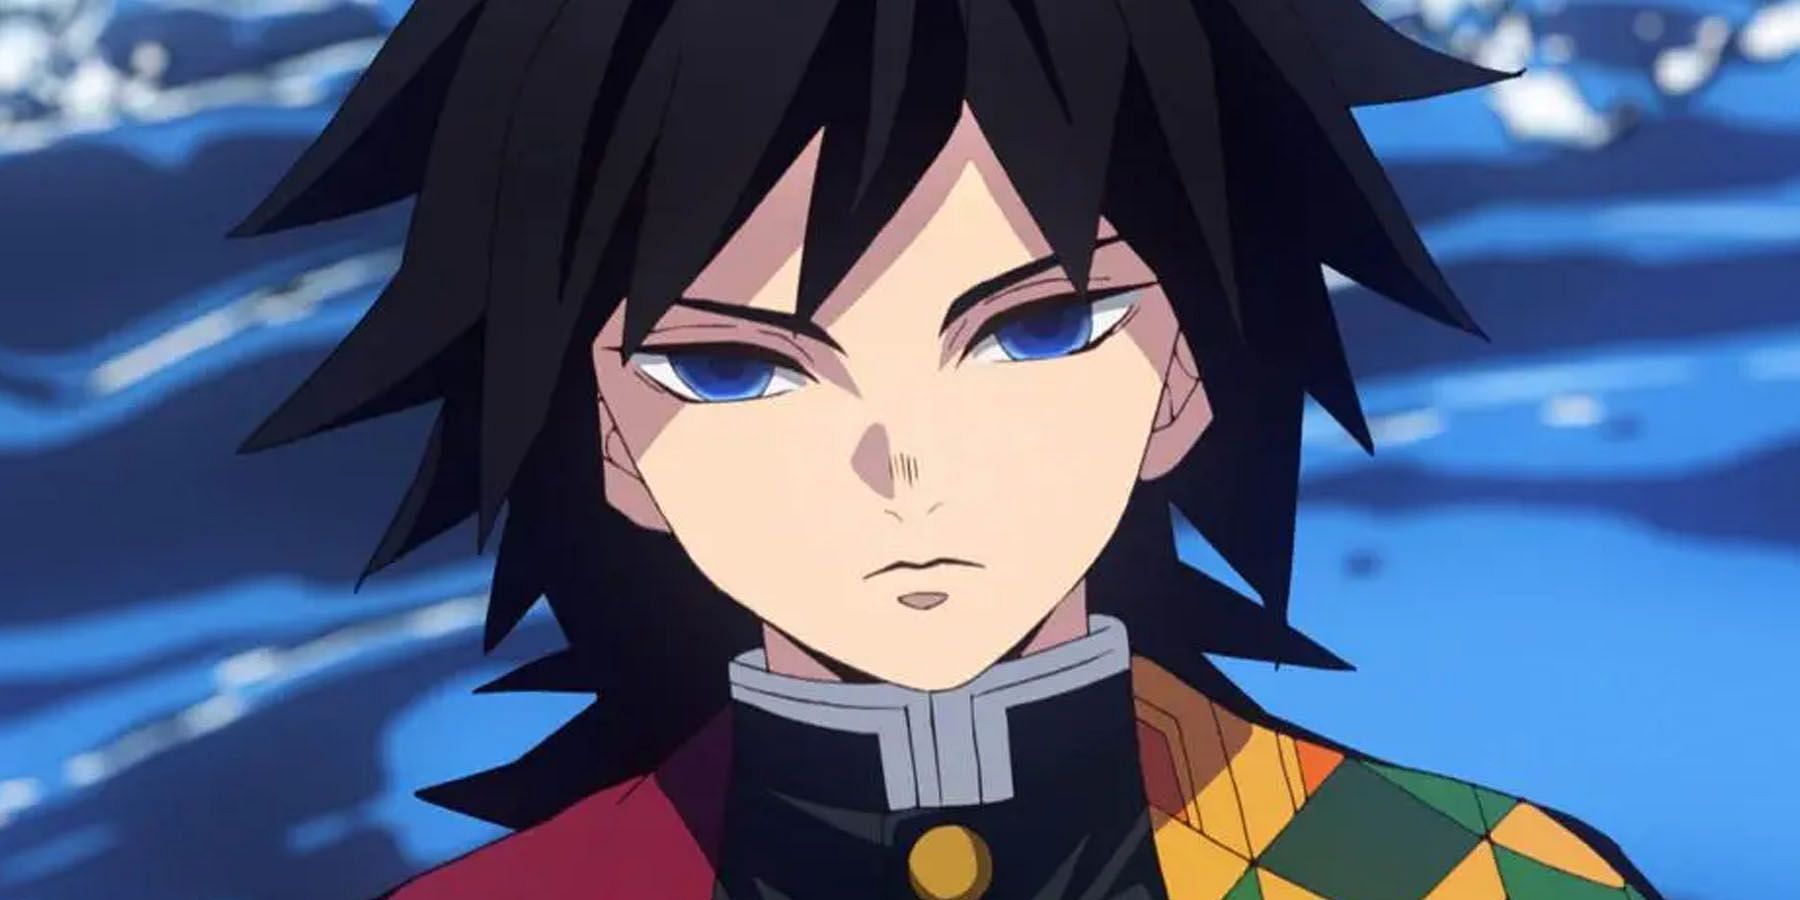 Giyu Tomioka as seen in the anime series (Image via Ufotable)